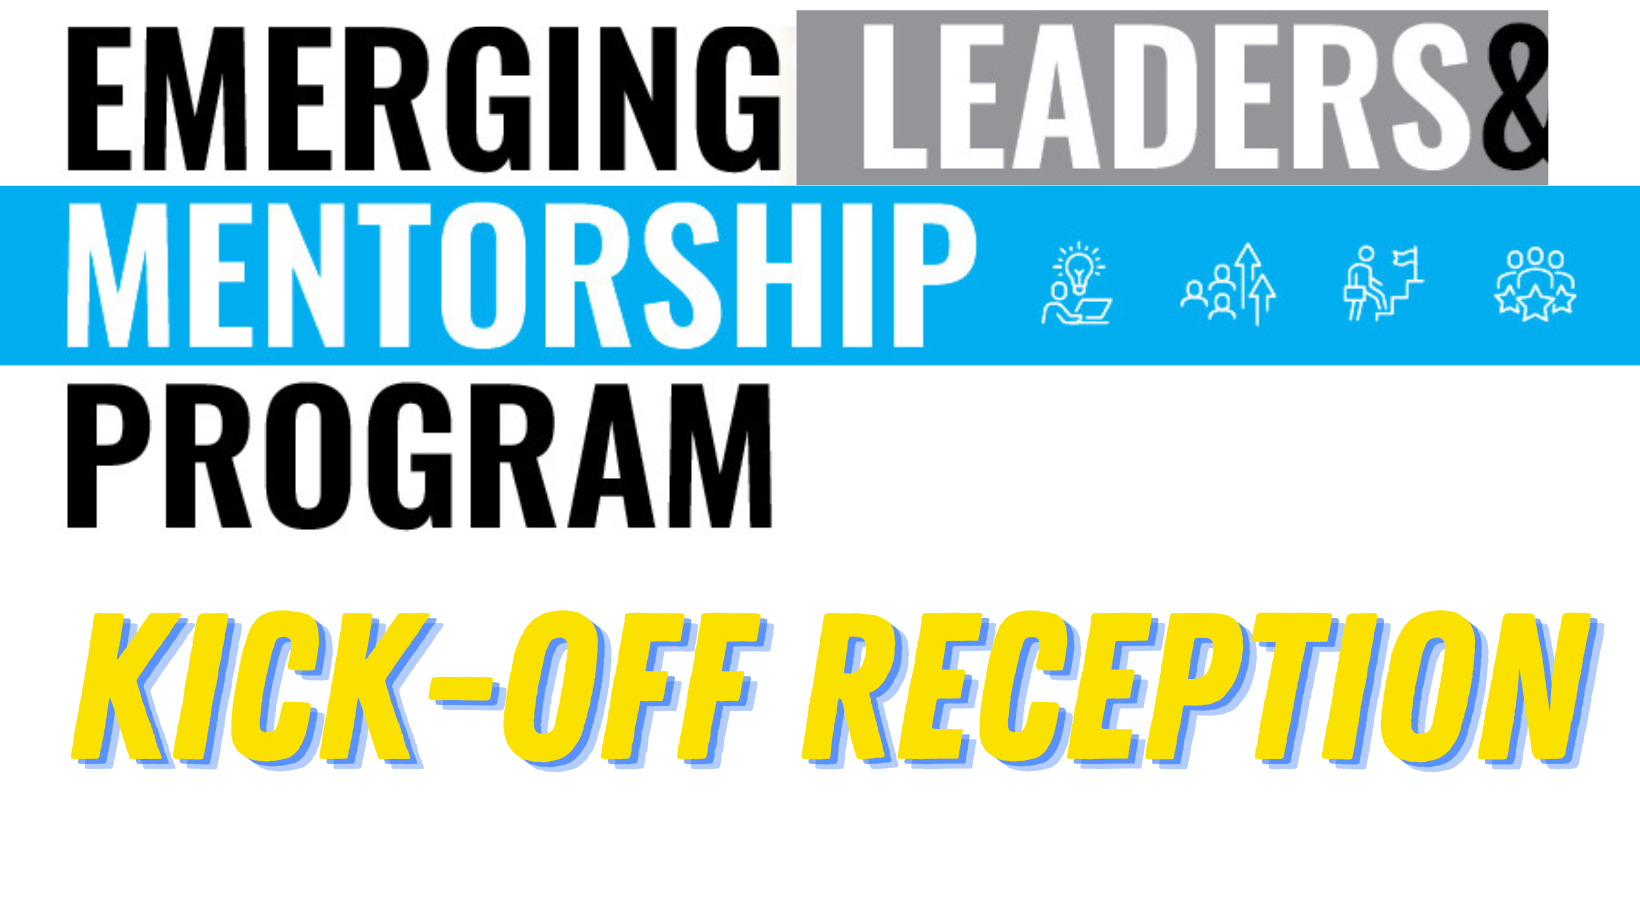 Emerging Leaders & Mentorship Program Kick-off Reception